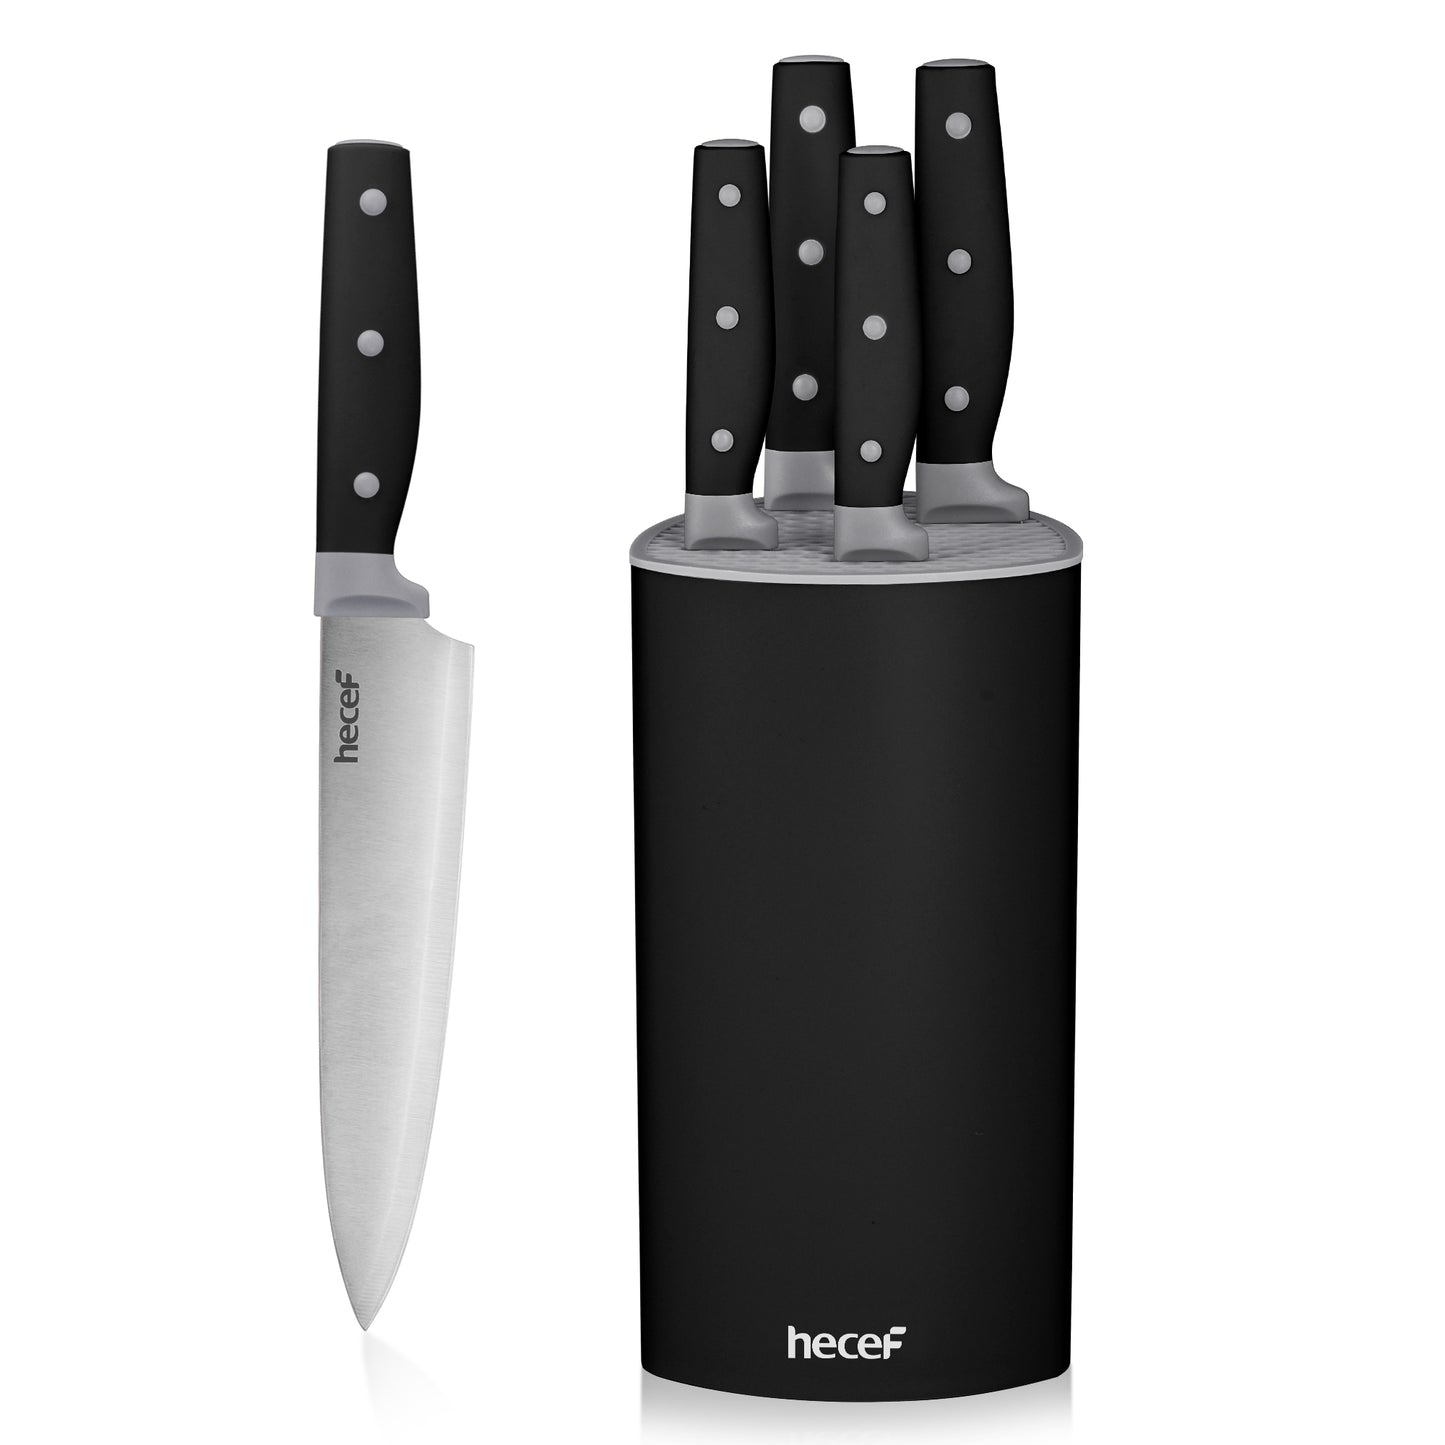 Hecef 6PCS Kitchen Knife Block Set with Universal Knife Block Holder, High Carbon Stainless Steel Pink Chef Knife Set - Hecef Kitchen